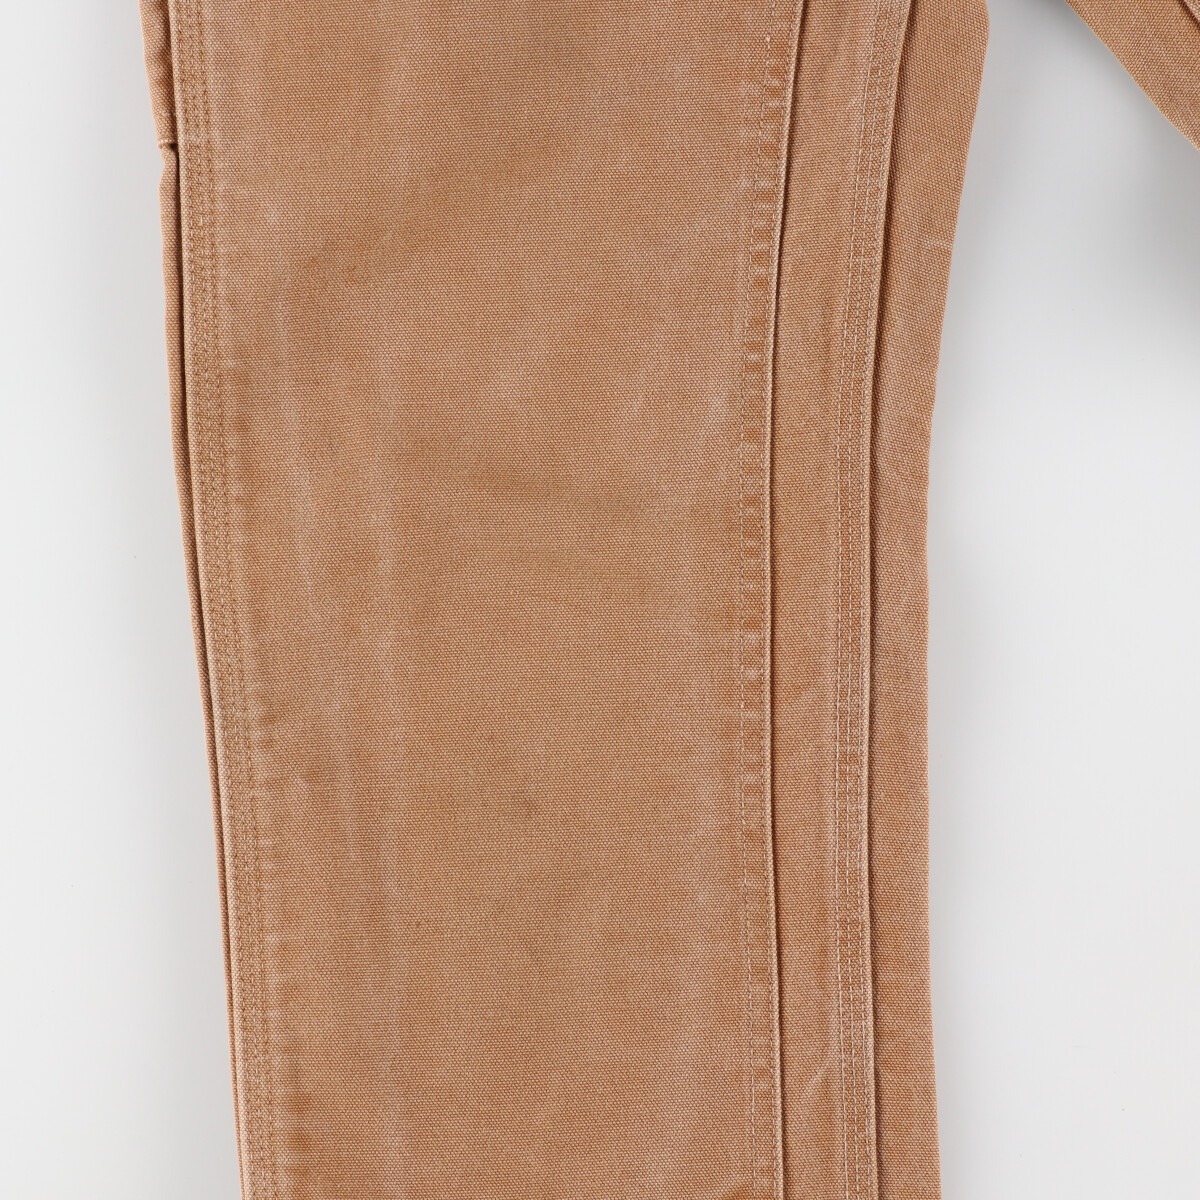  б/у одежда 90 годы Carhartt Carhartt Dungaree Fit Duck painter's pants USA производства женский L Vintage /eaa387705 [SS2403]